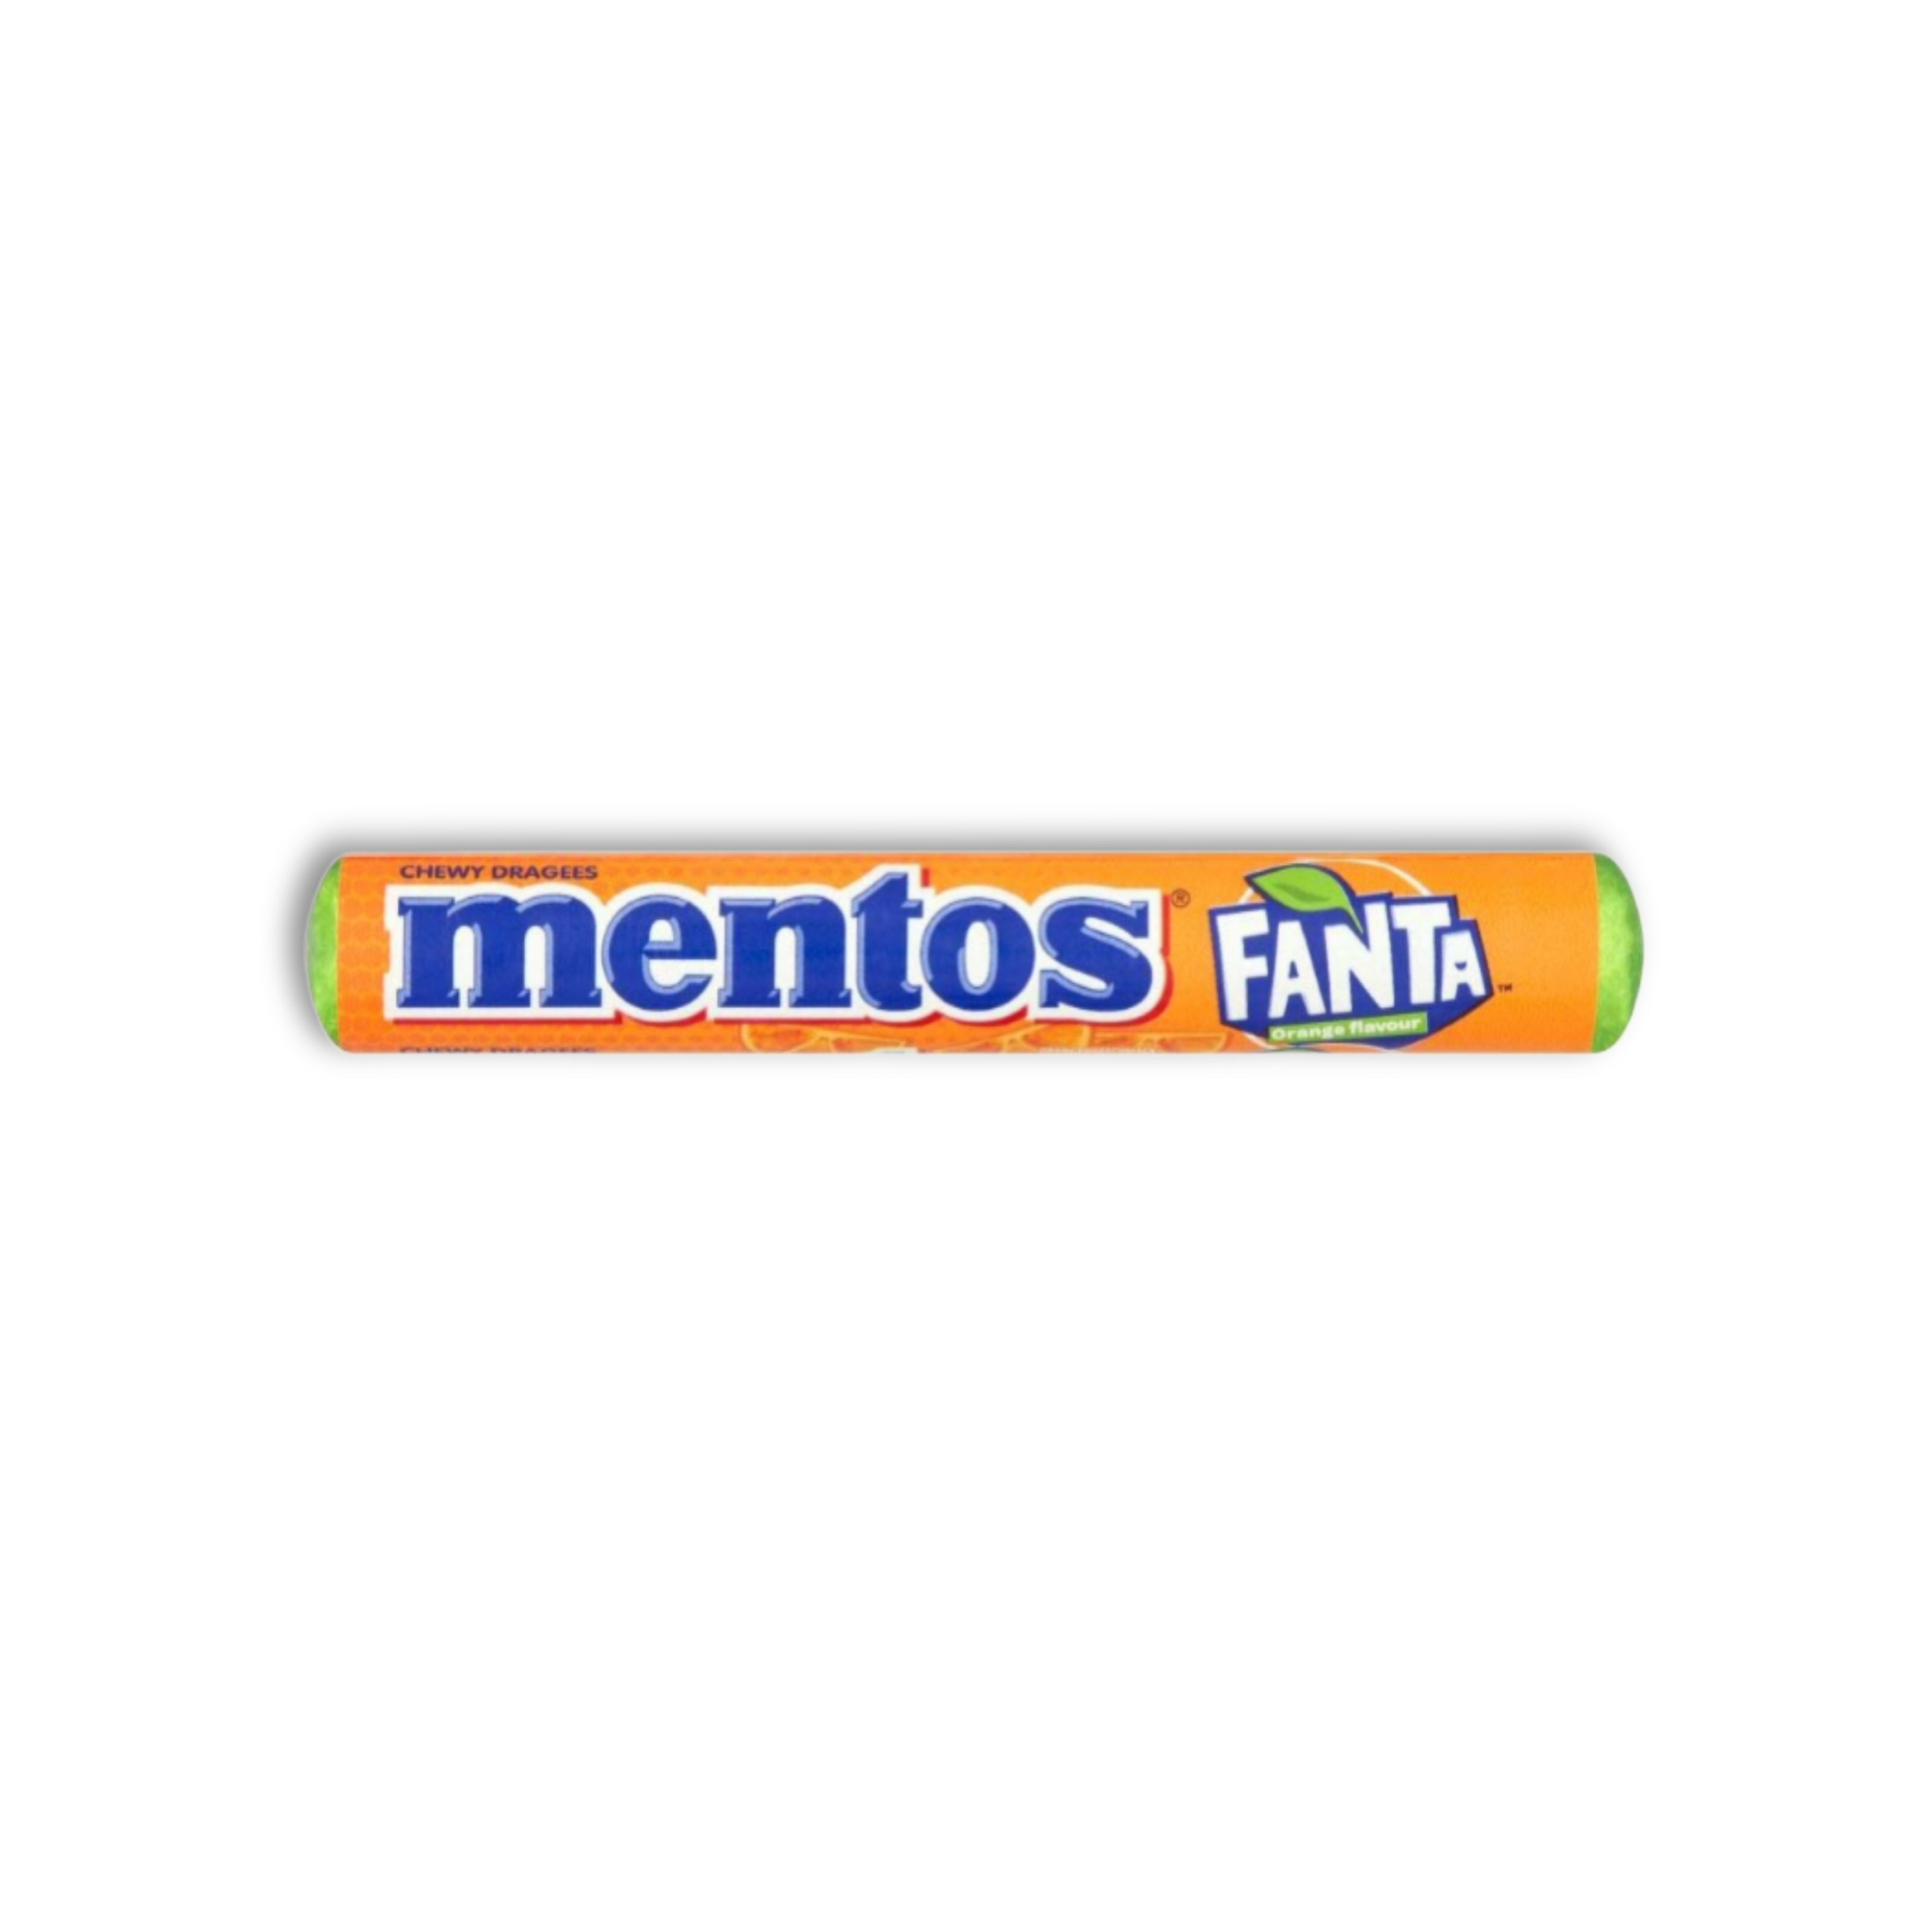 Mentos - Fanta Orange